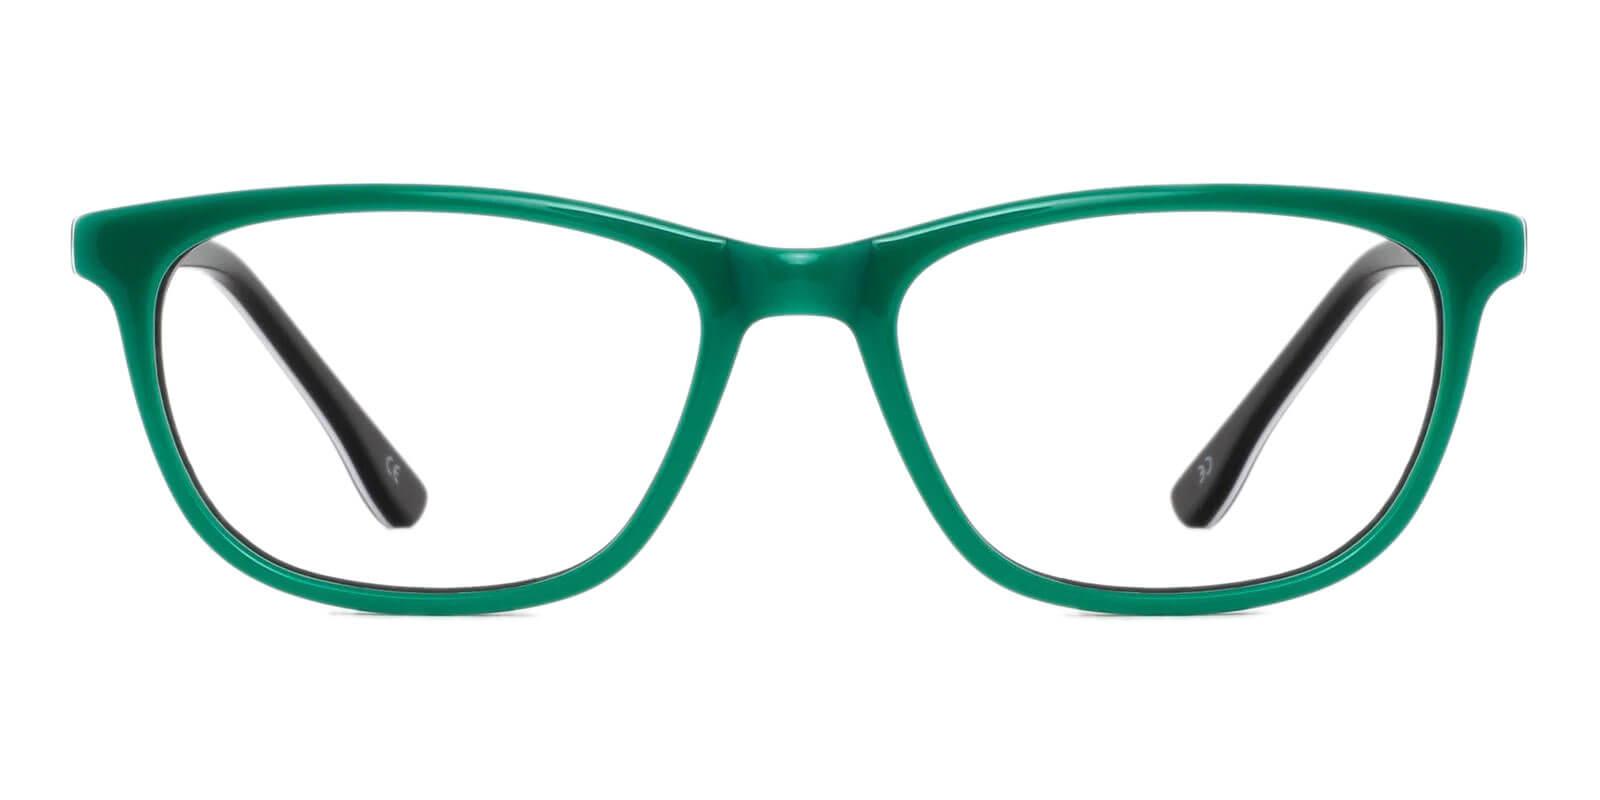 Machovec Green Acetate Eyeglasses , SpringHinges , UniversalBridgeFit Frames from ABBE Glasses